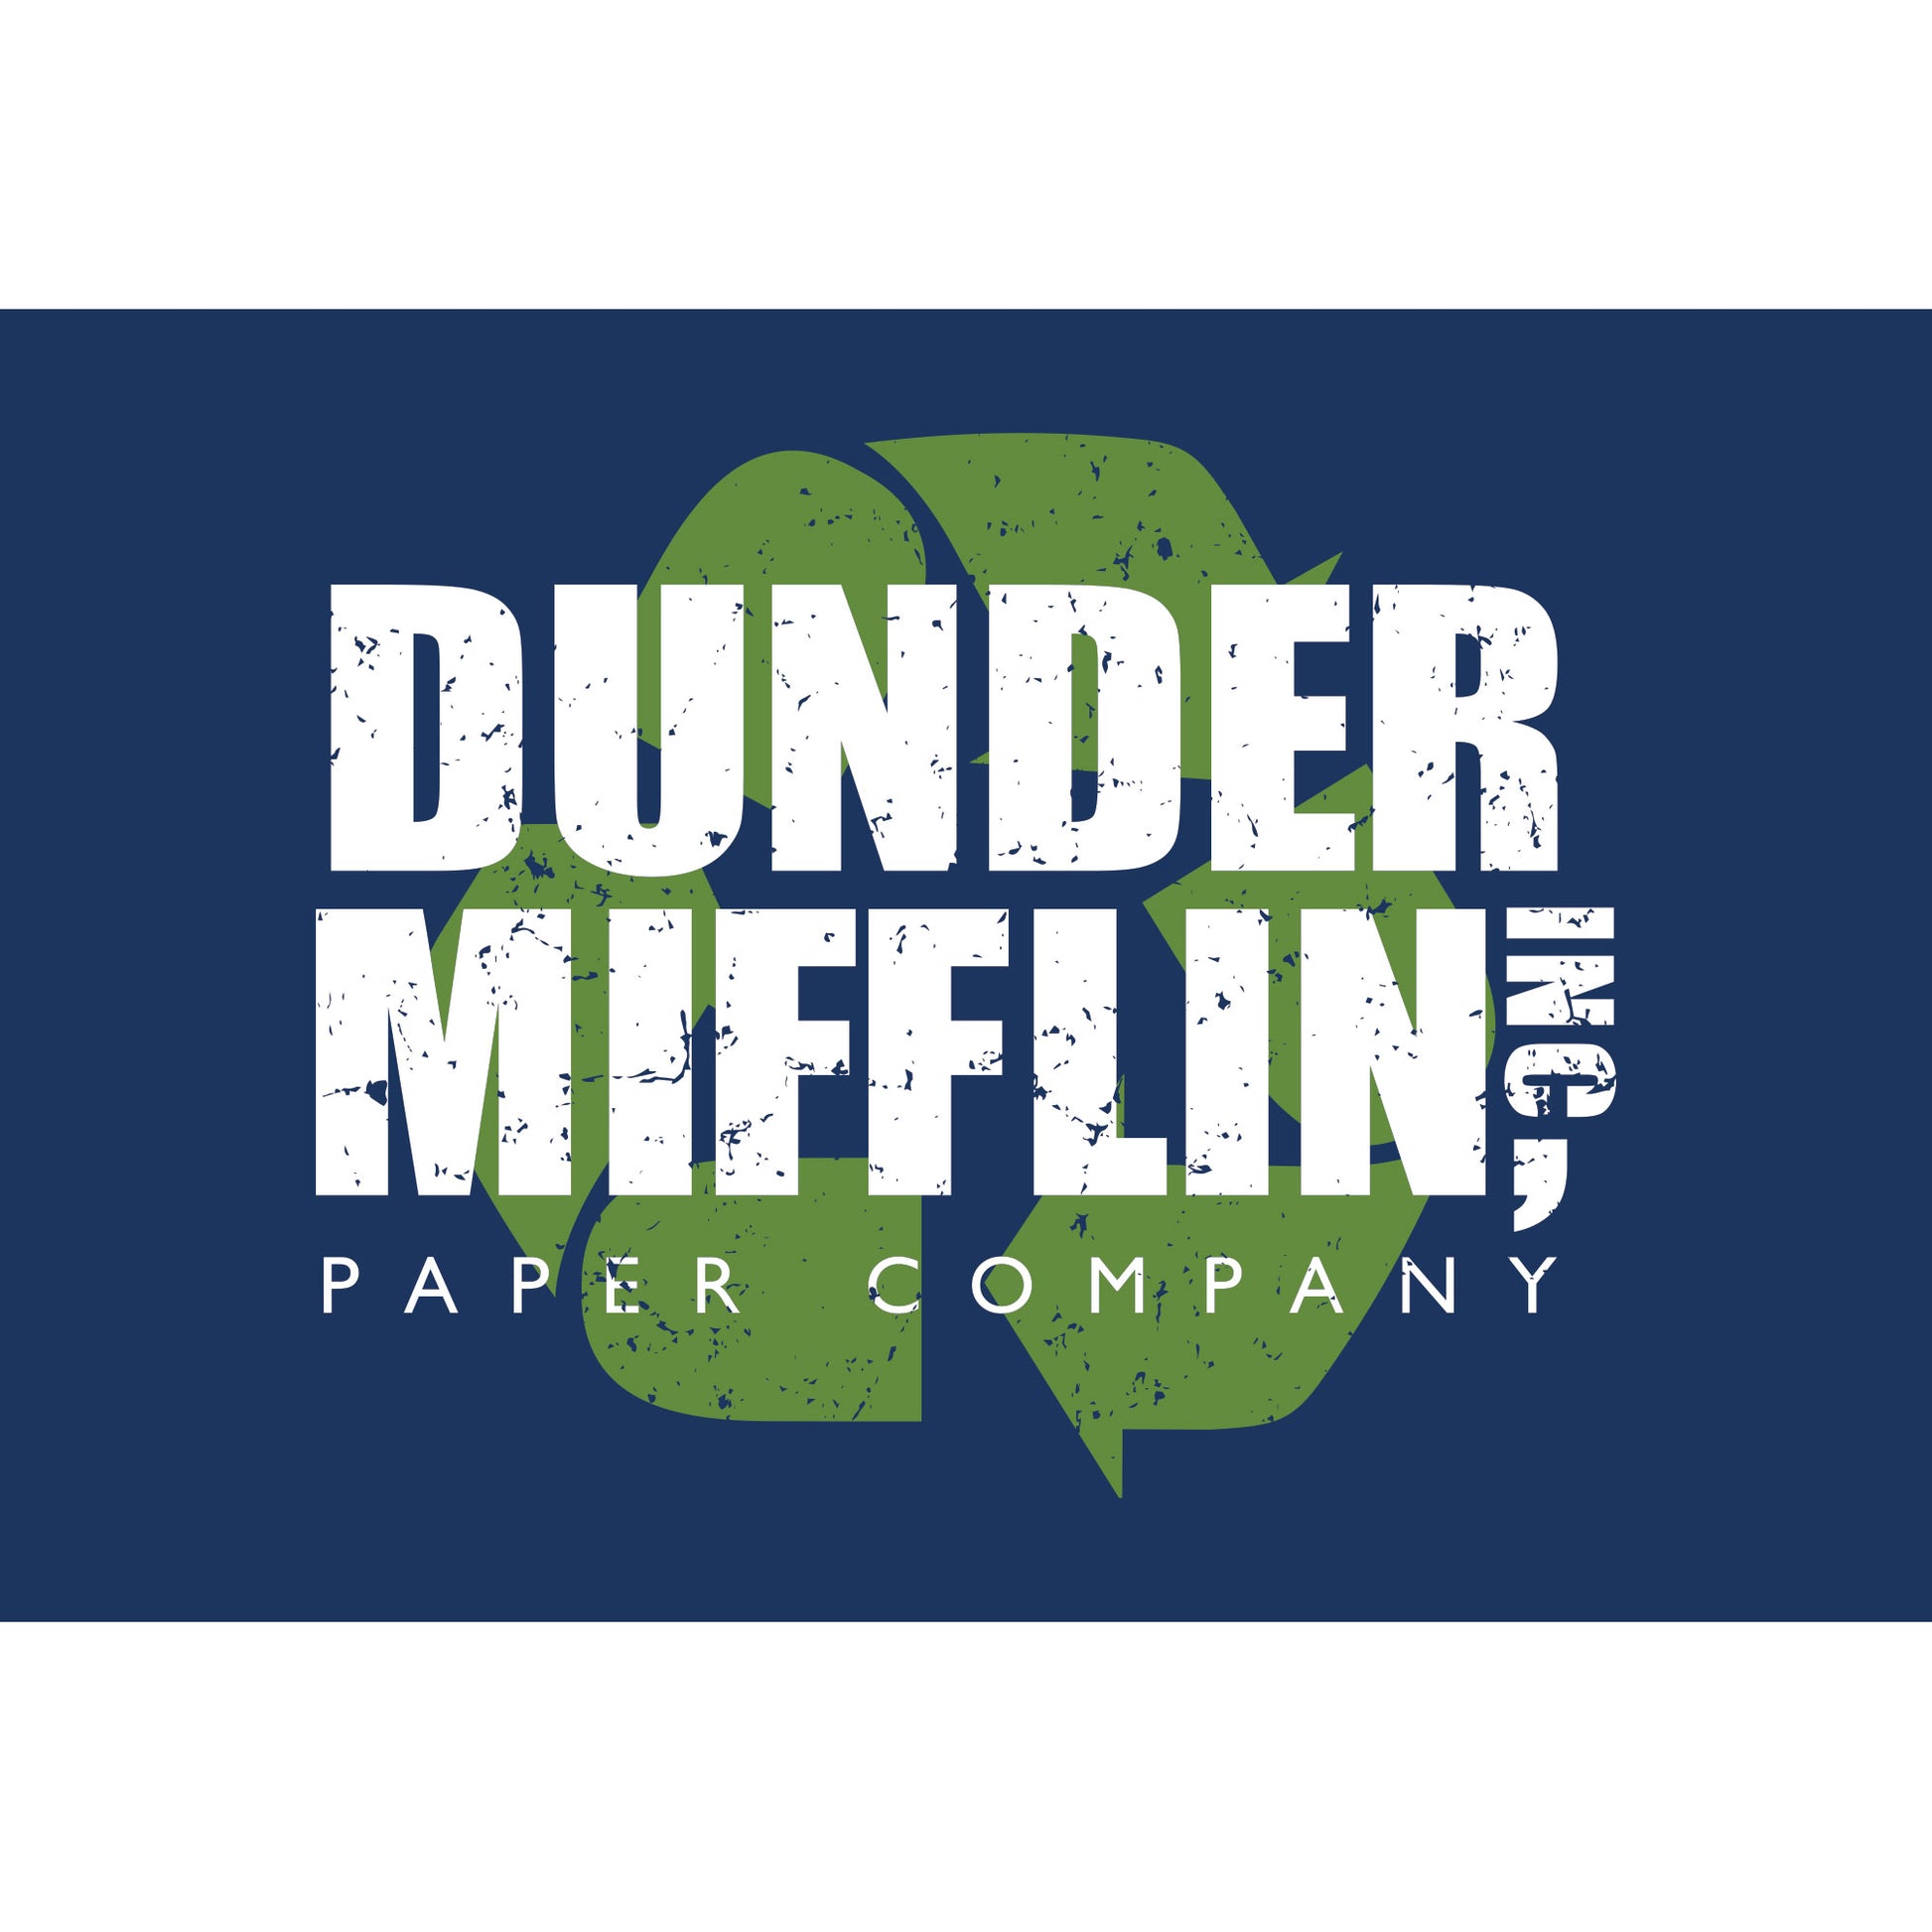 Dunder Mifflin Paper Company Blue Vinyl Sticker - Official The Office  Merchandise